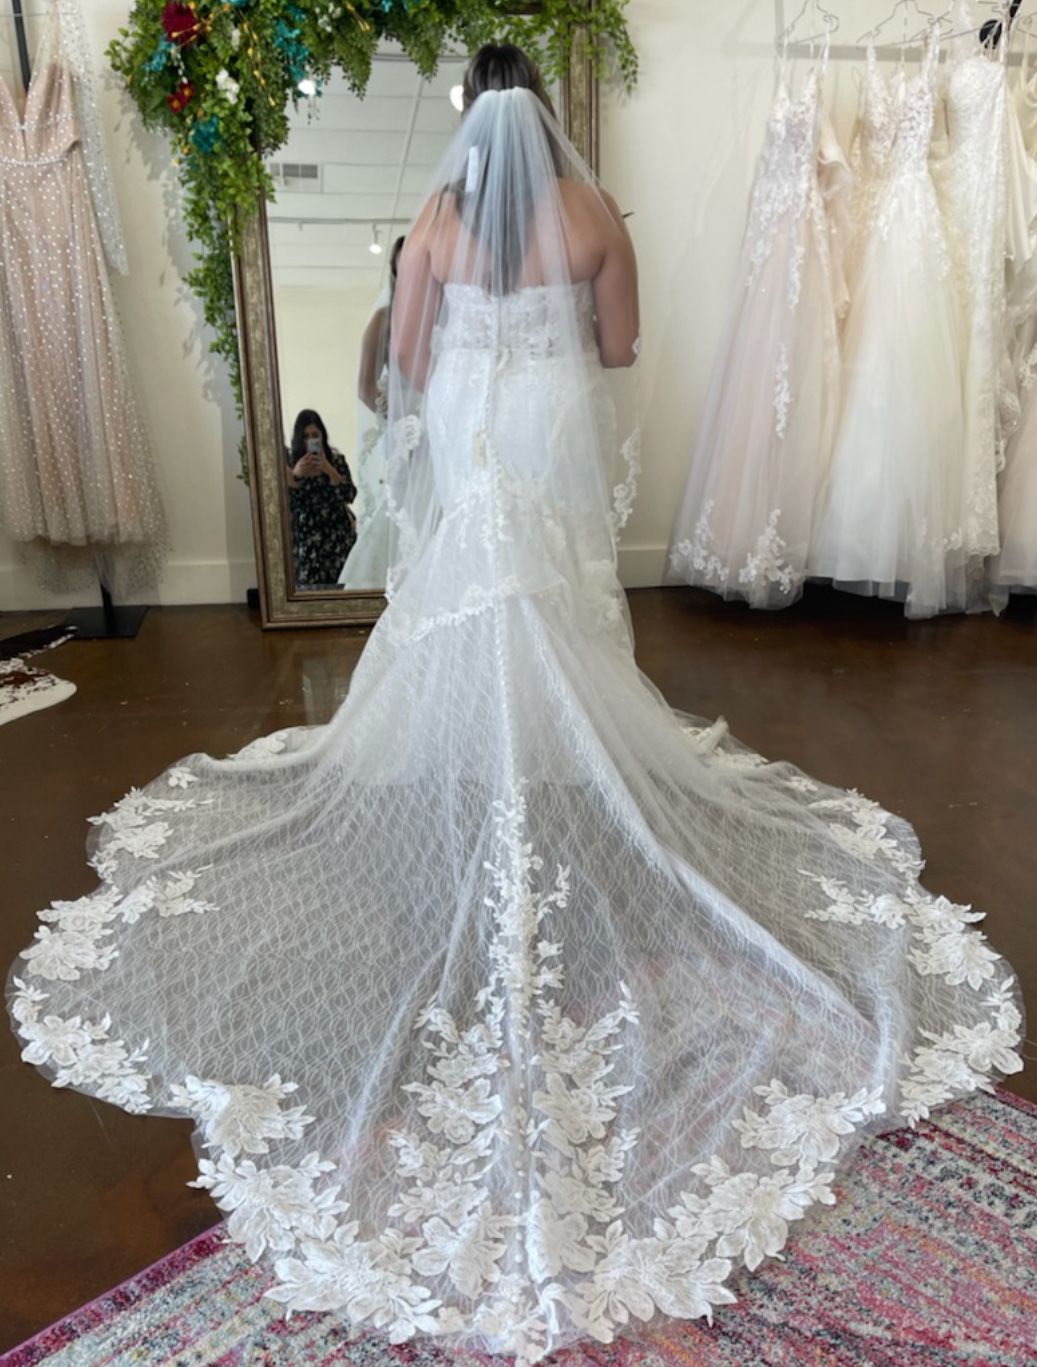 ****New ****Wedding Dress With Veil 